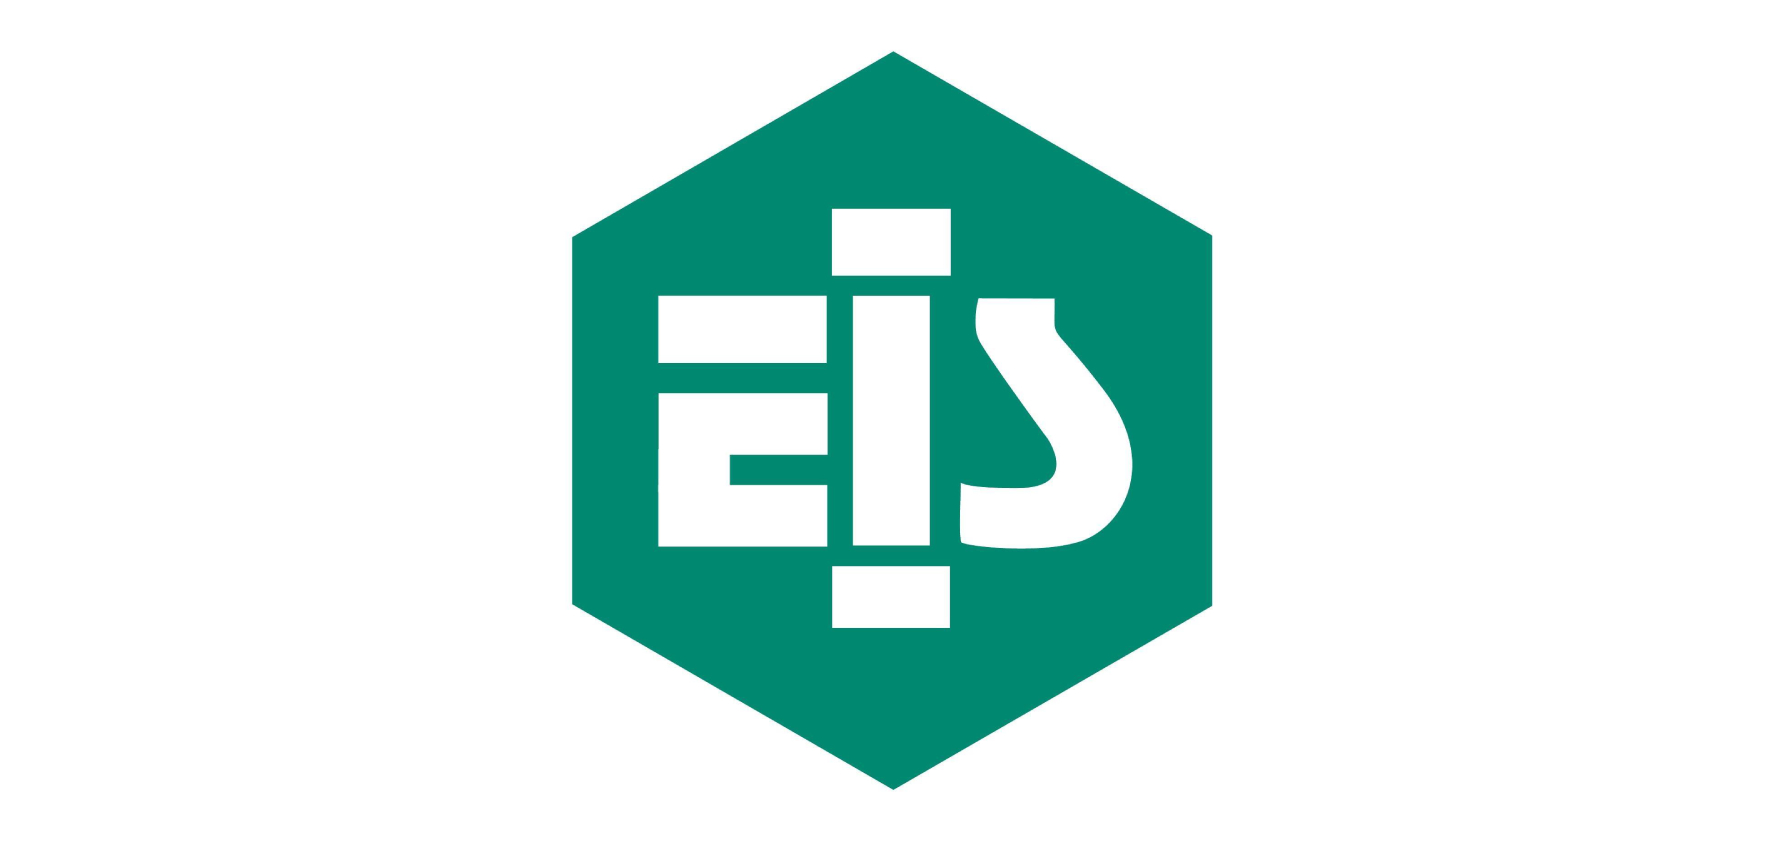 Engineering Integrity Society - EIS